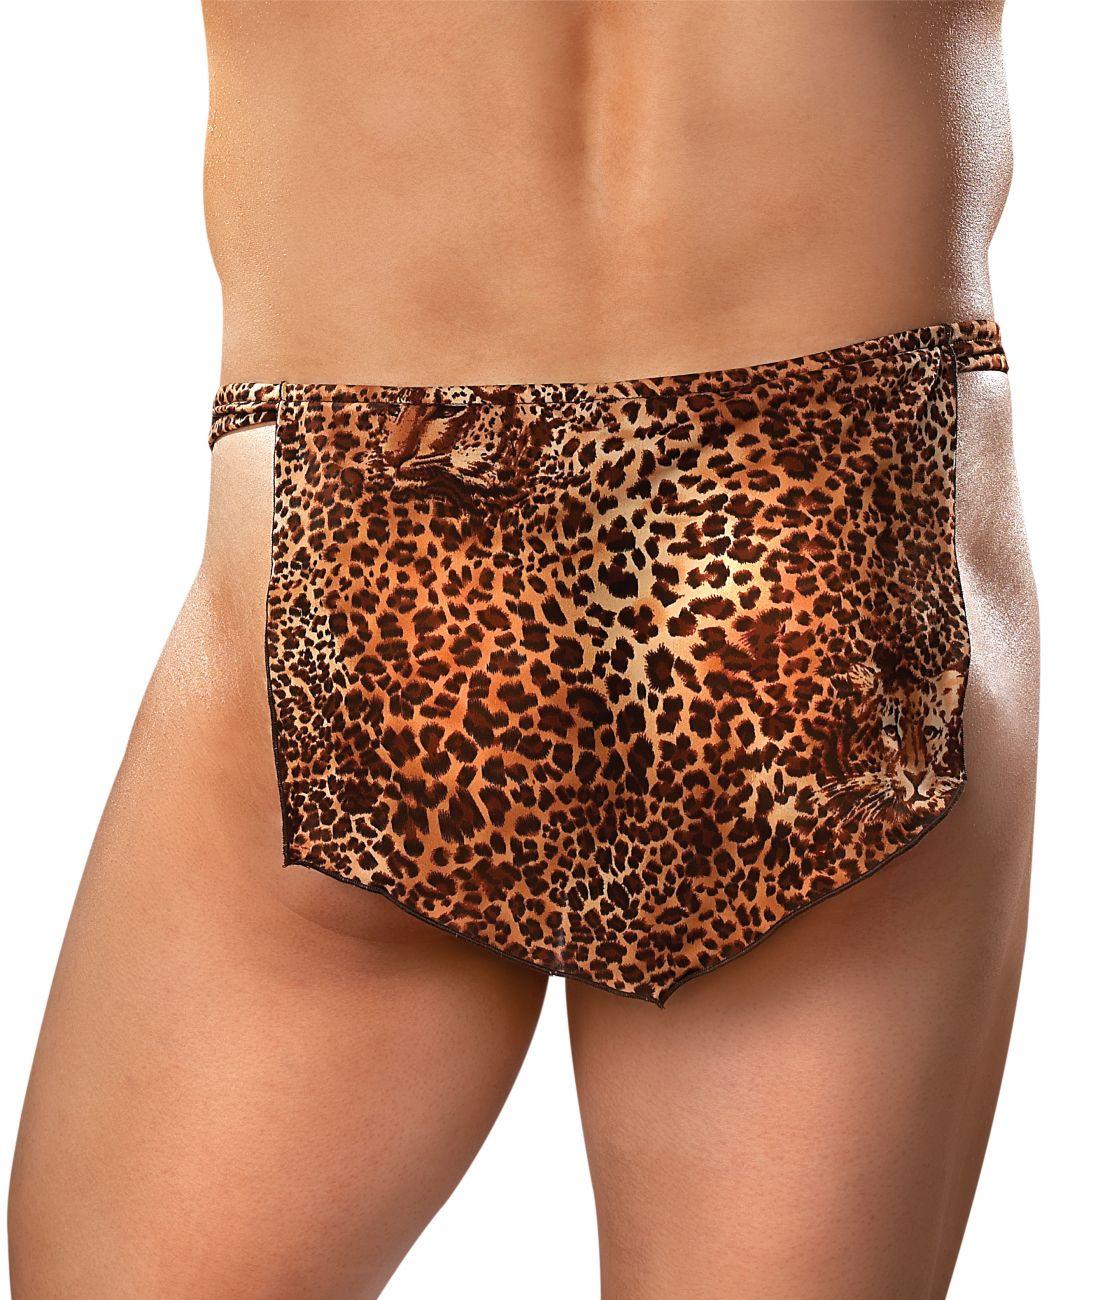 image of product,Animal Tarzan Thong - SEXYEONE